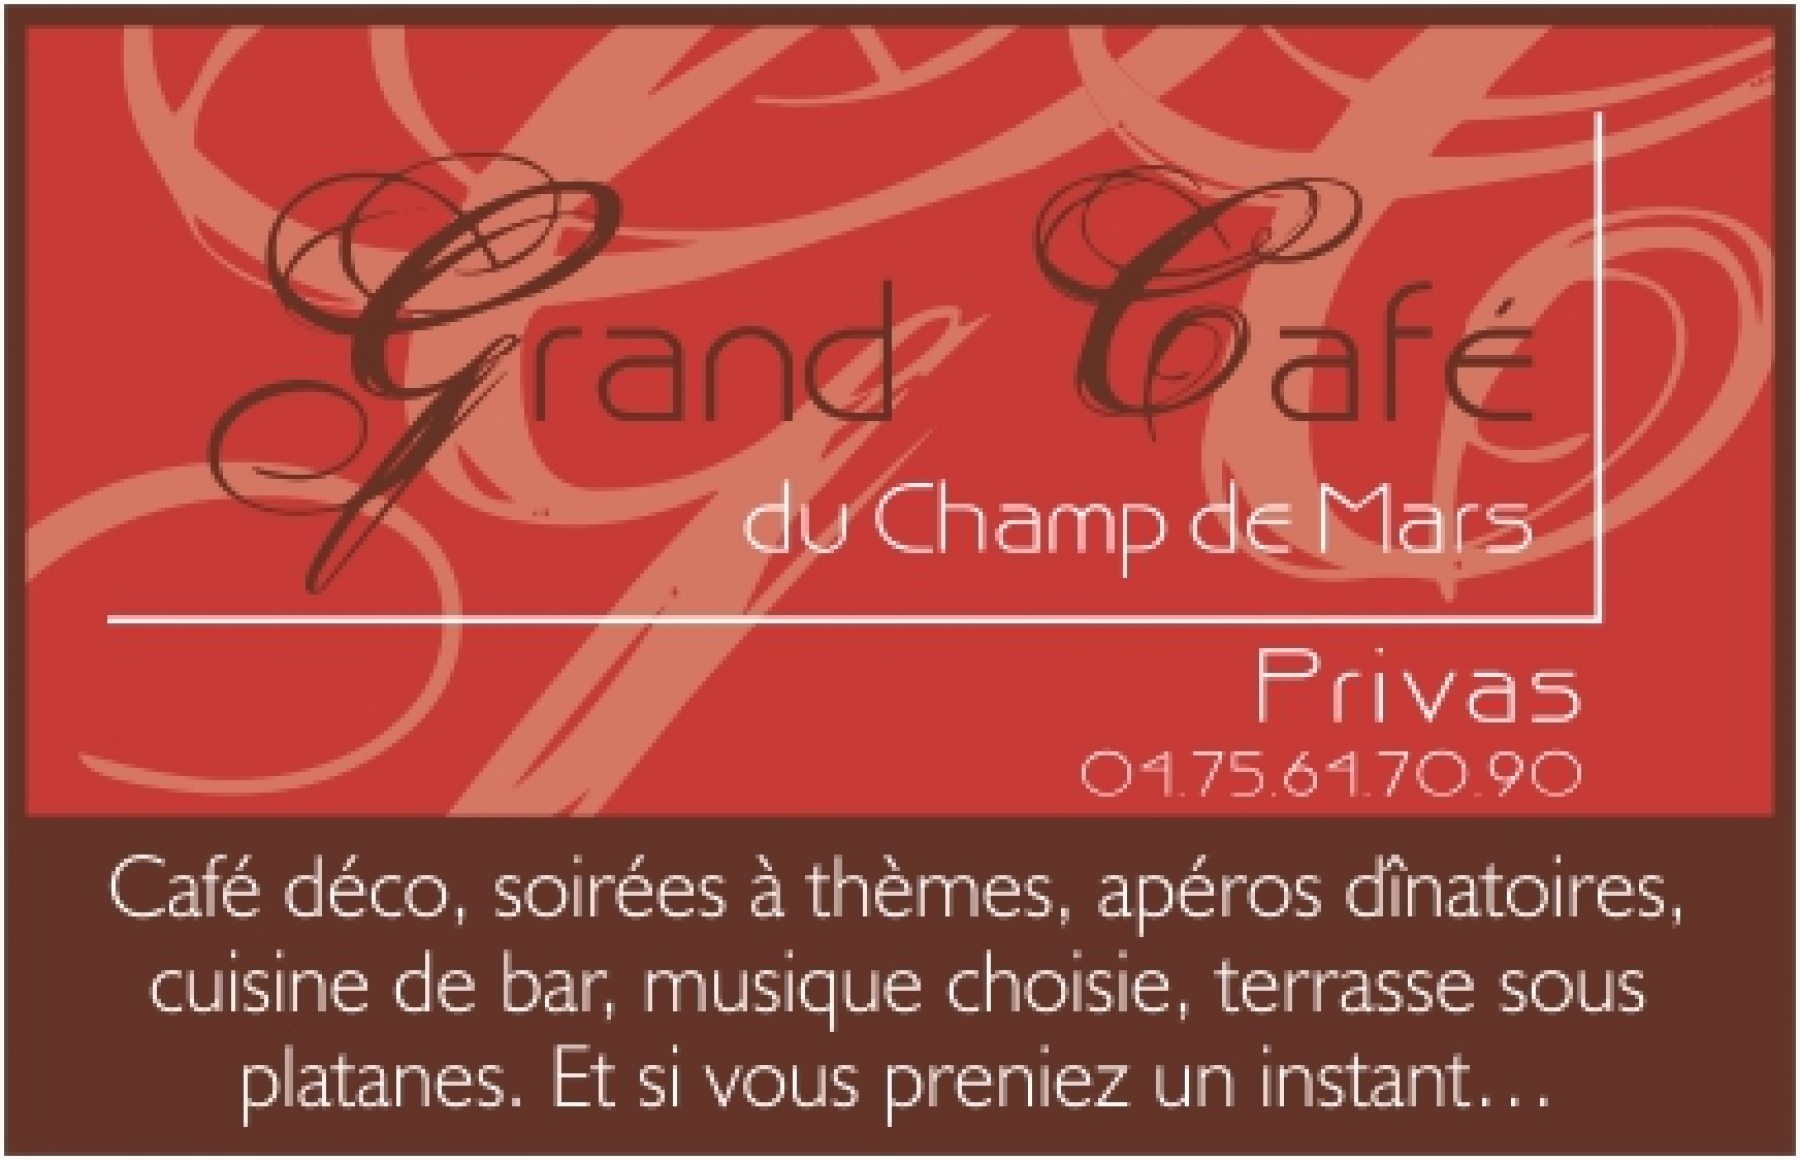 Grand Café du Champ de Mars